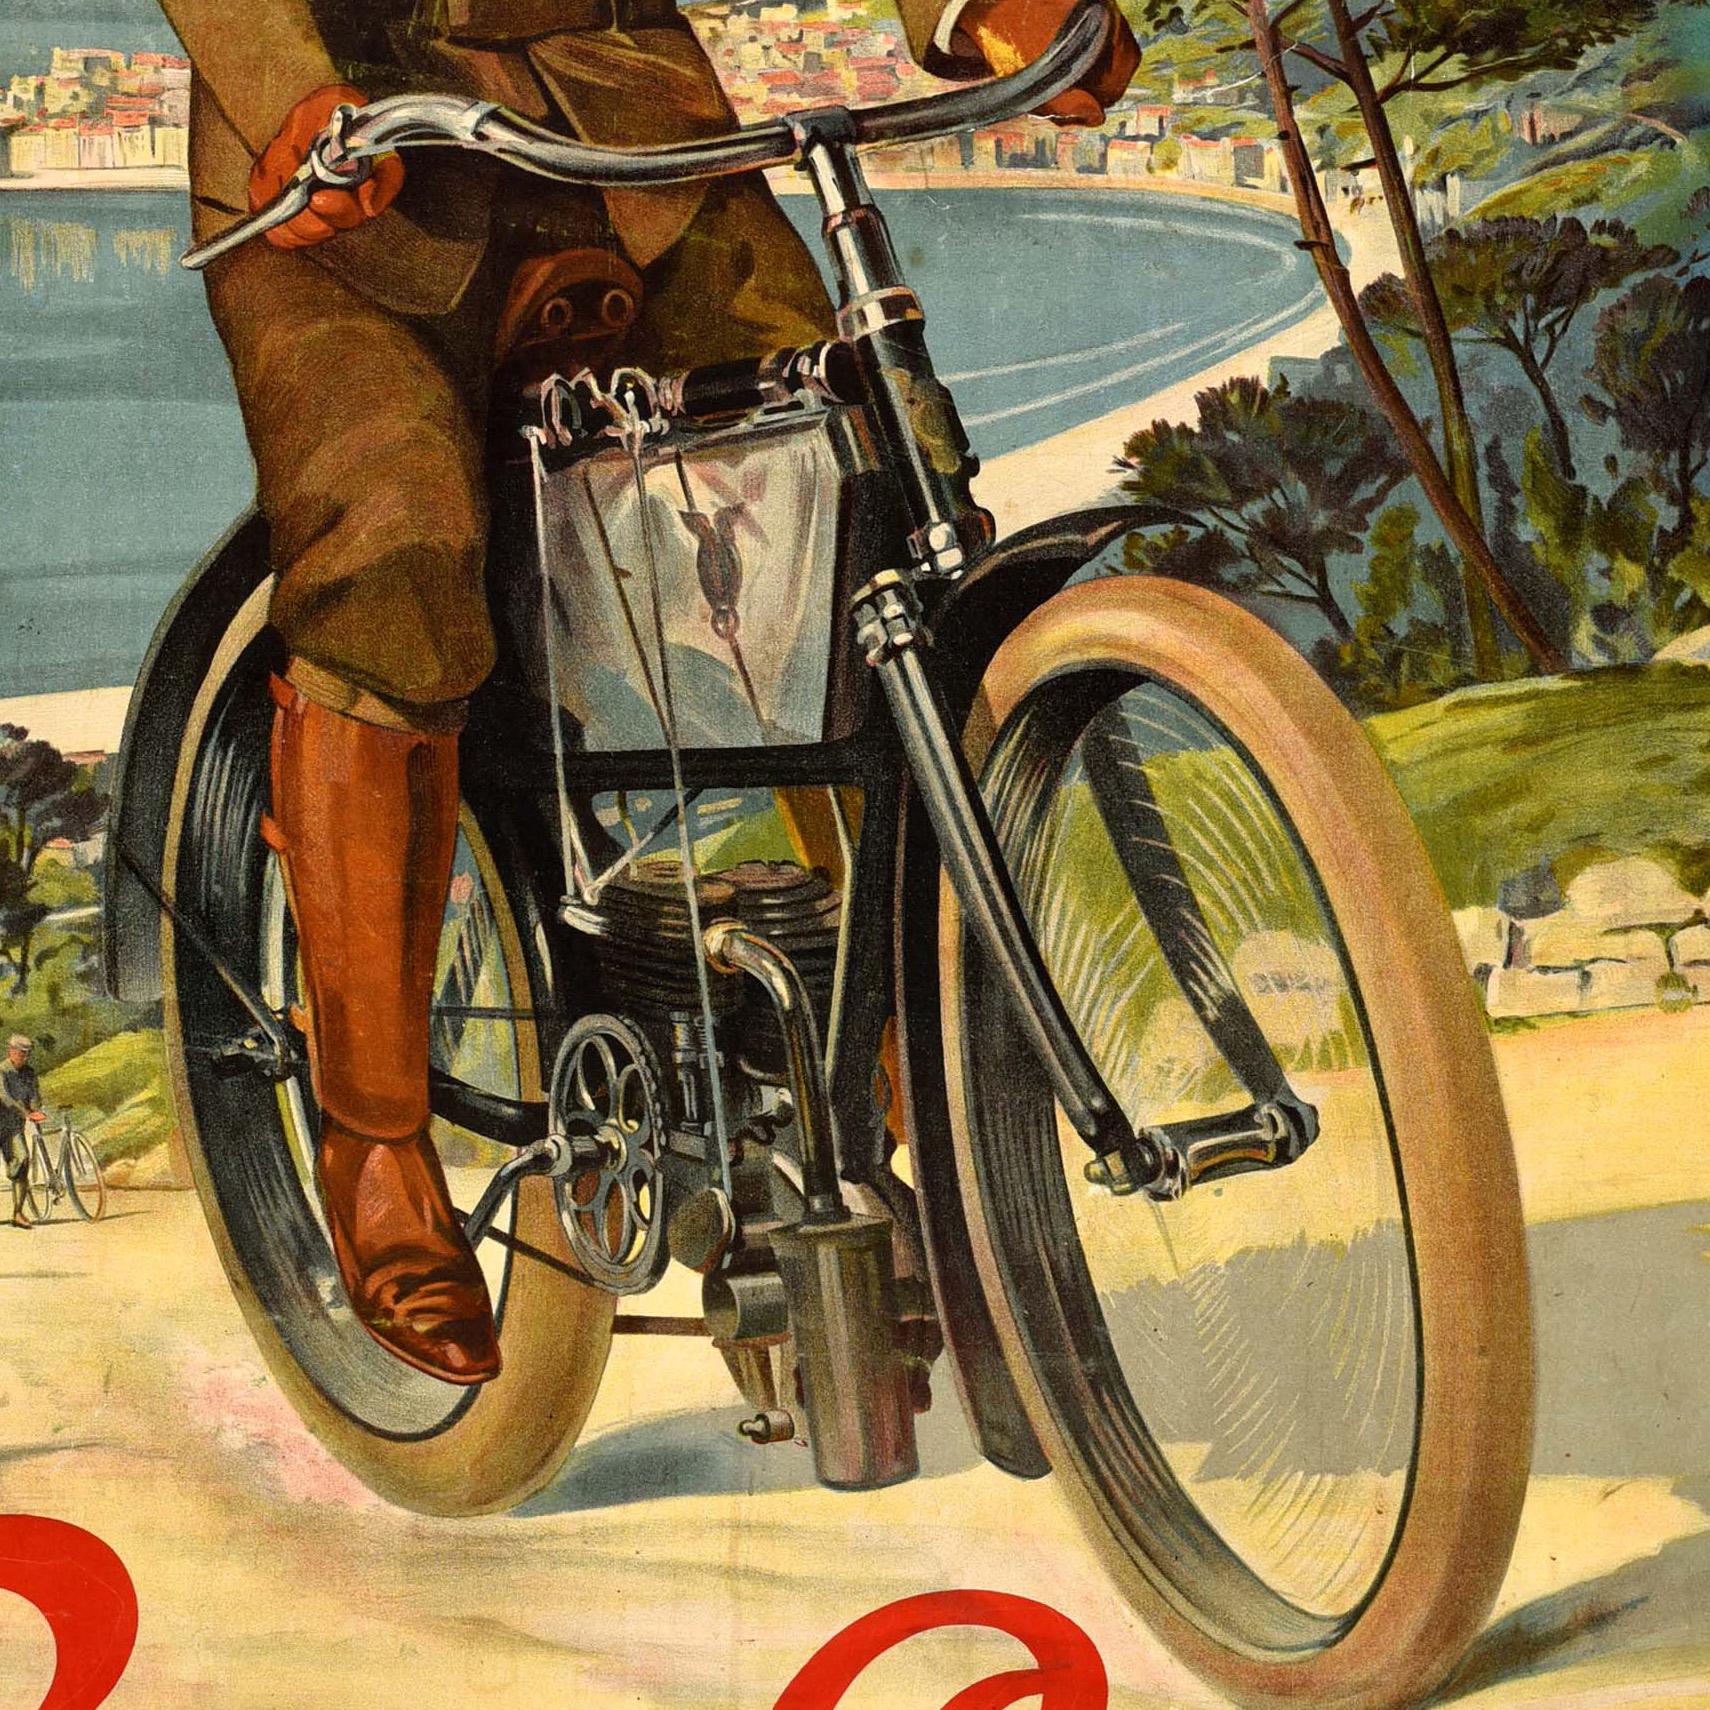 Original Antique Advertising Poster Griffon Motorcycle Bike France Design Art - Print by Hugo d'Alesi